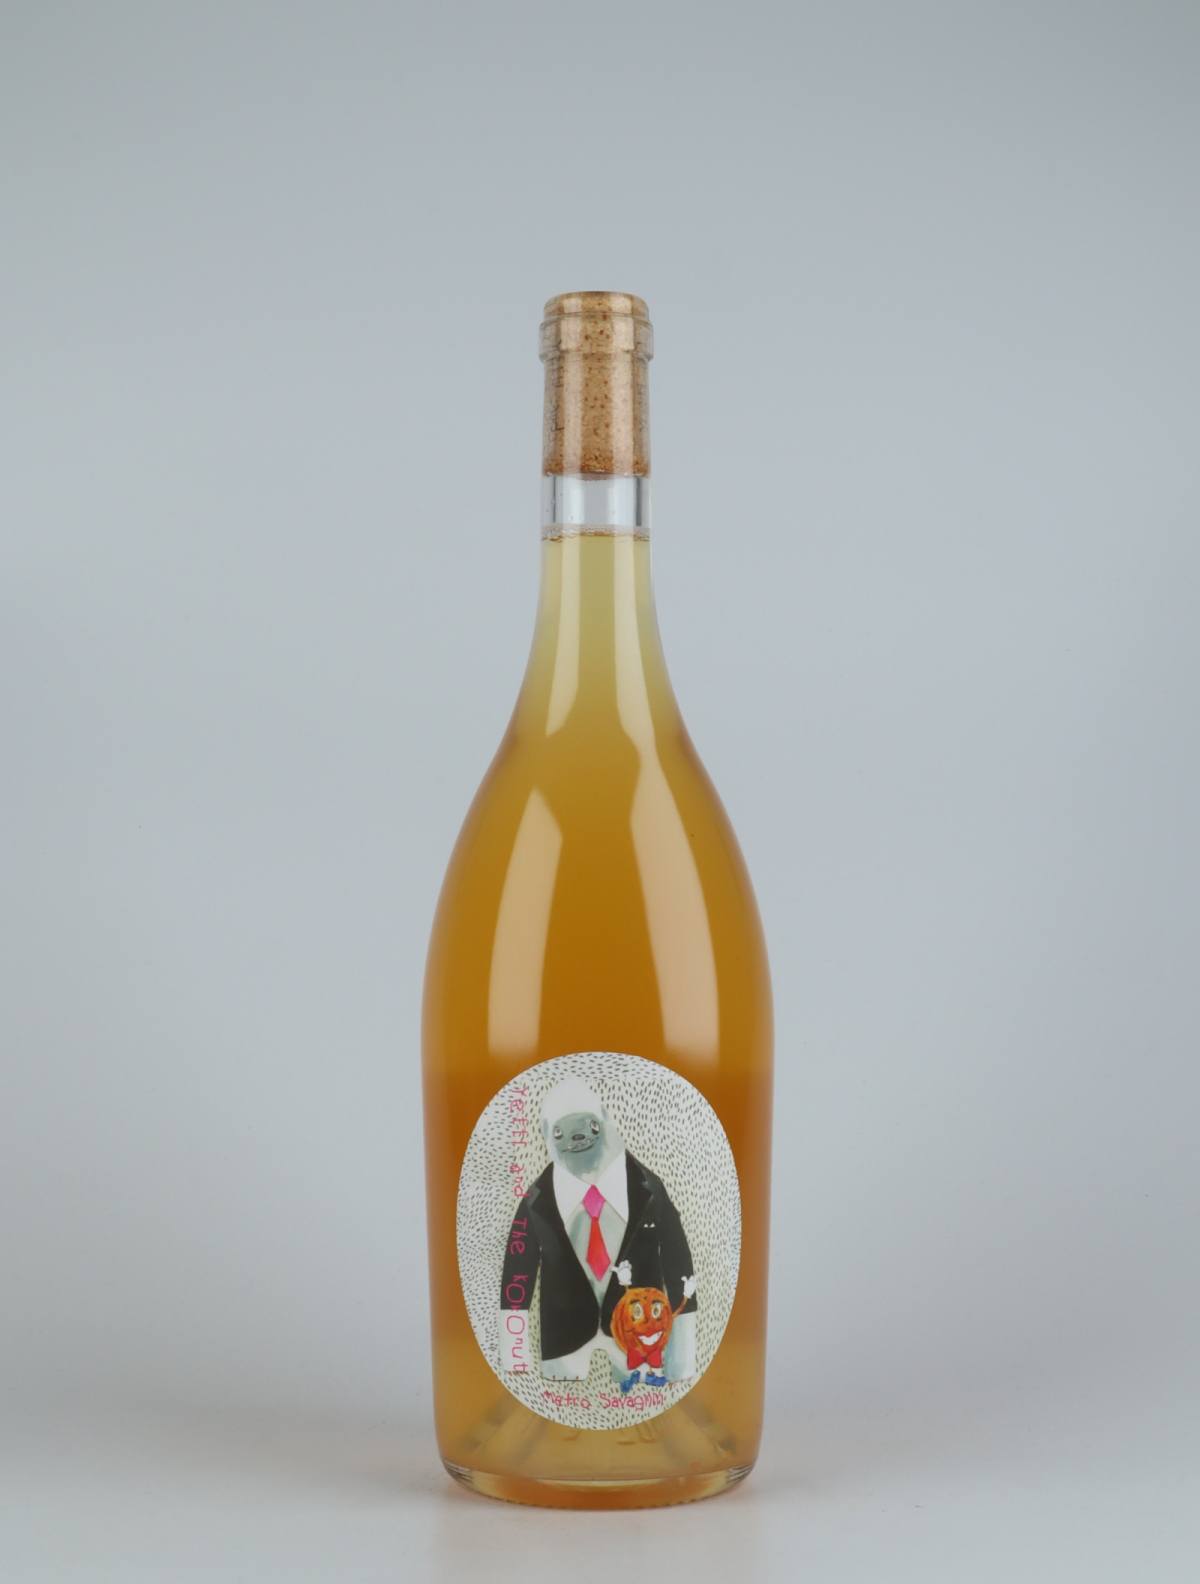 A bottle 2020 Metro Savagnin White wine from Yetti and the Kokonut, Barossa Valley in Australia